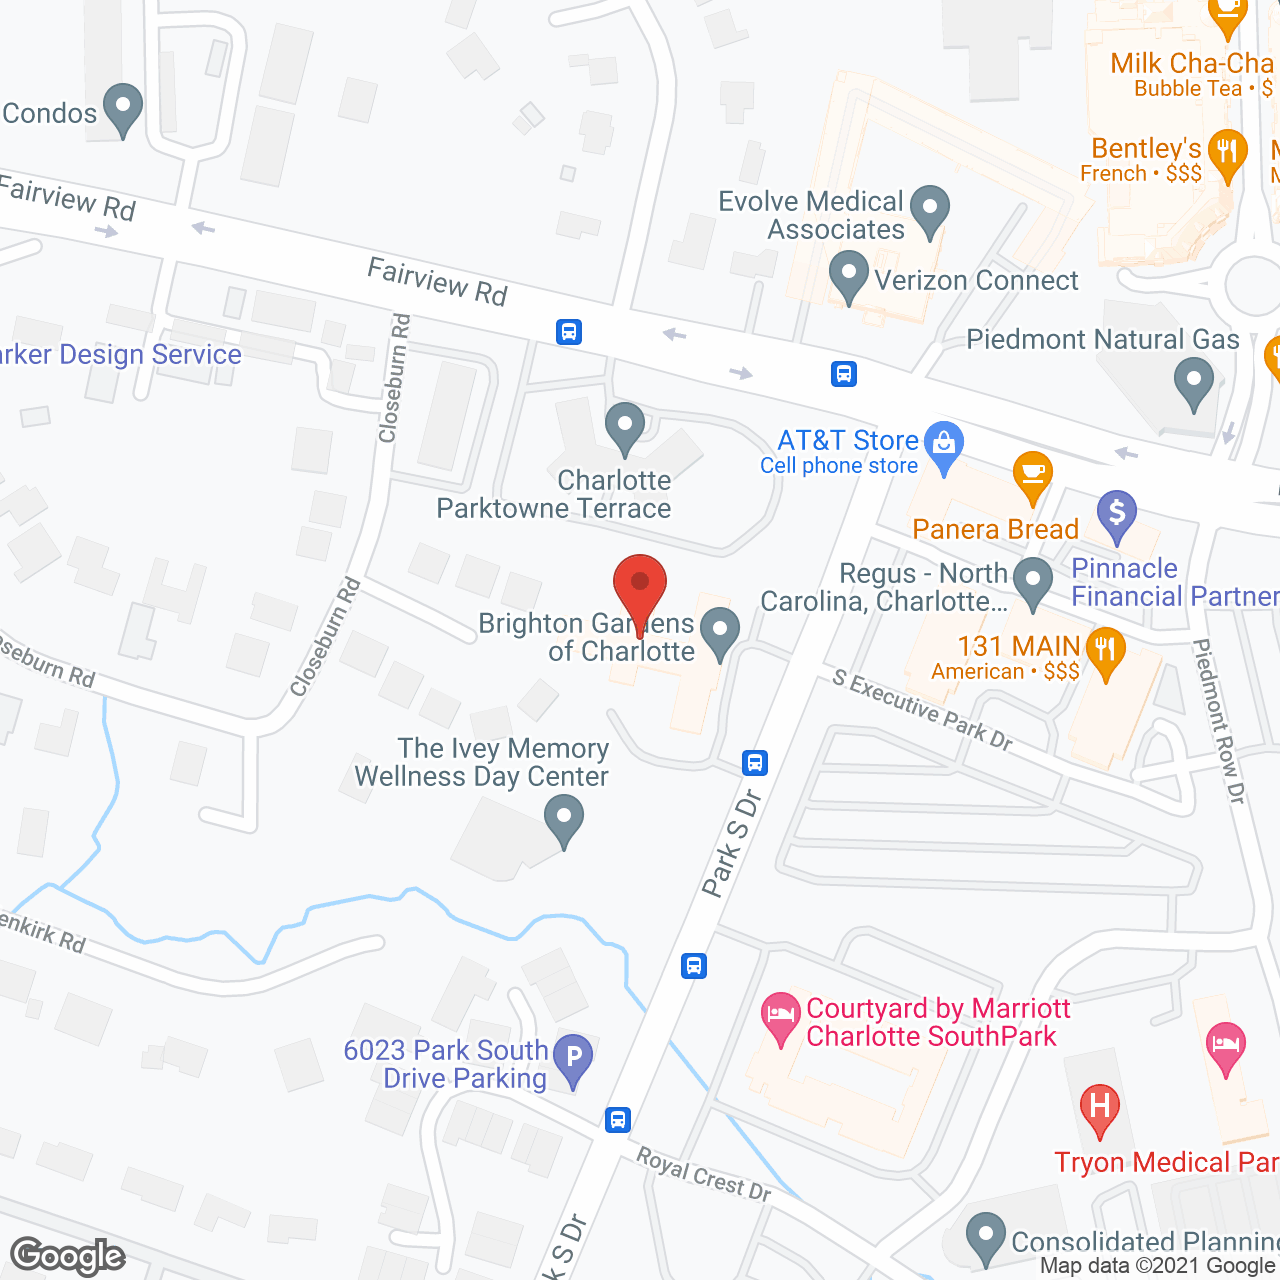 Brighton Gardens of Charlotte in google map